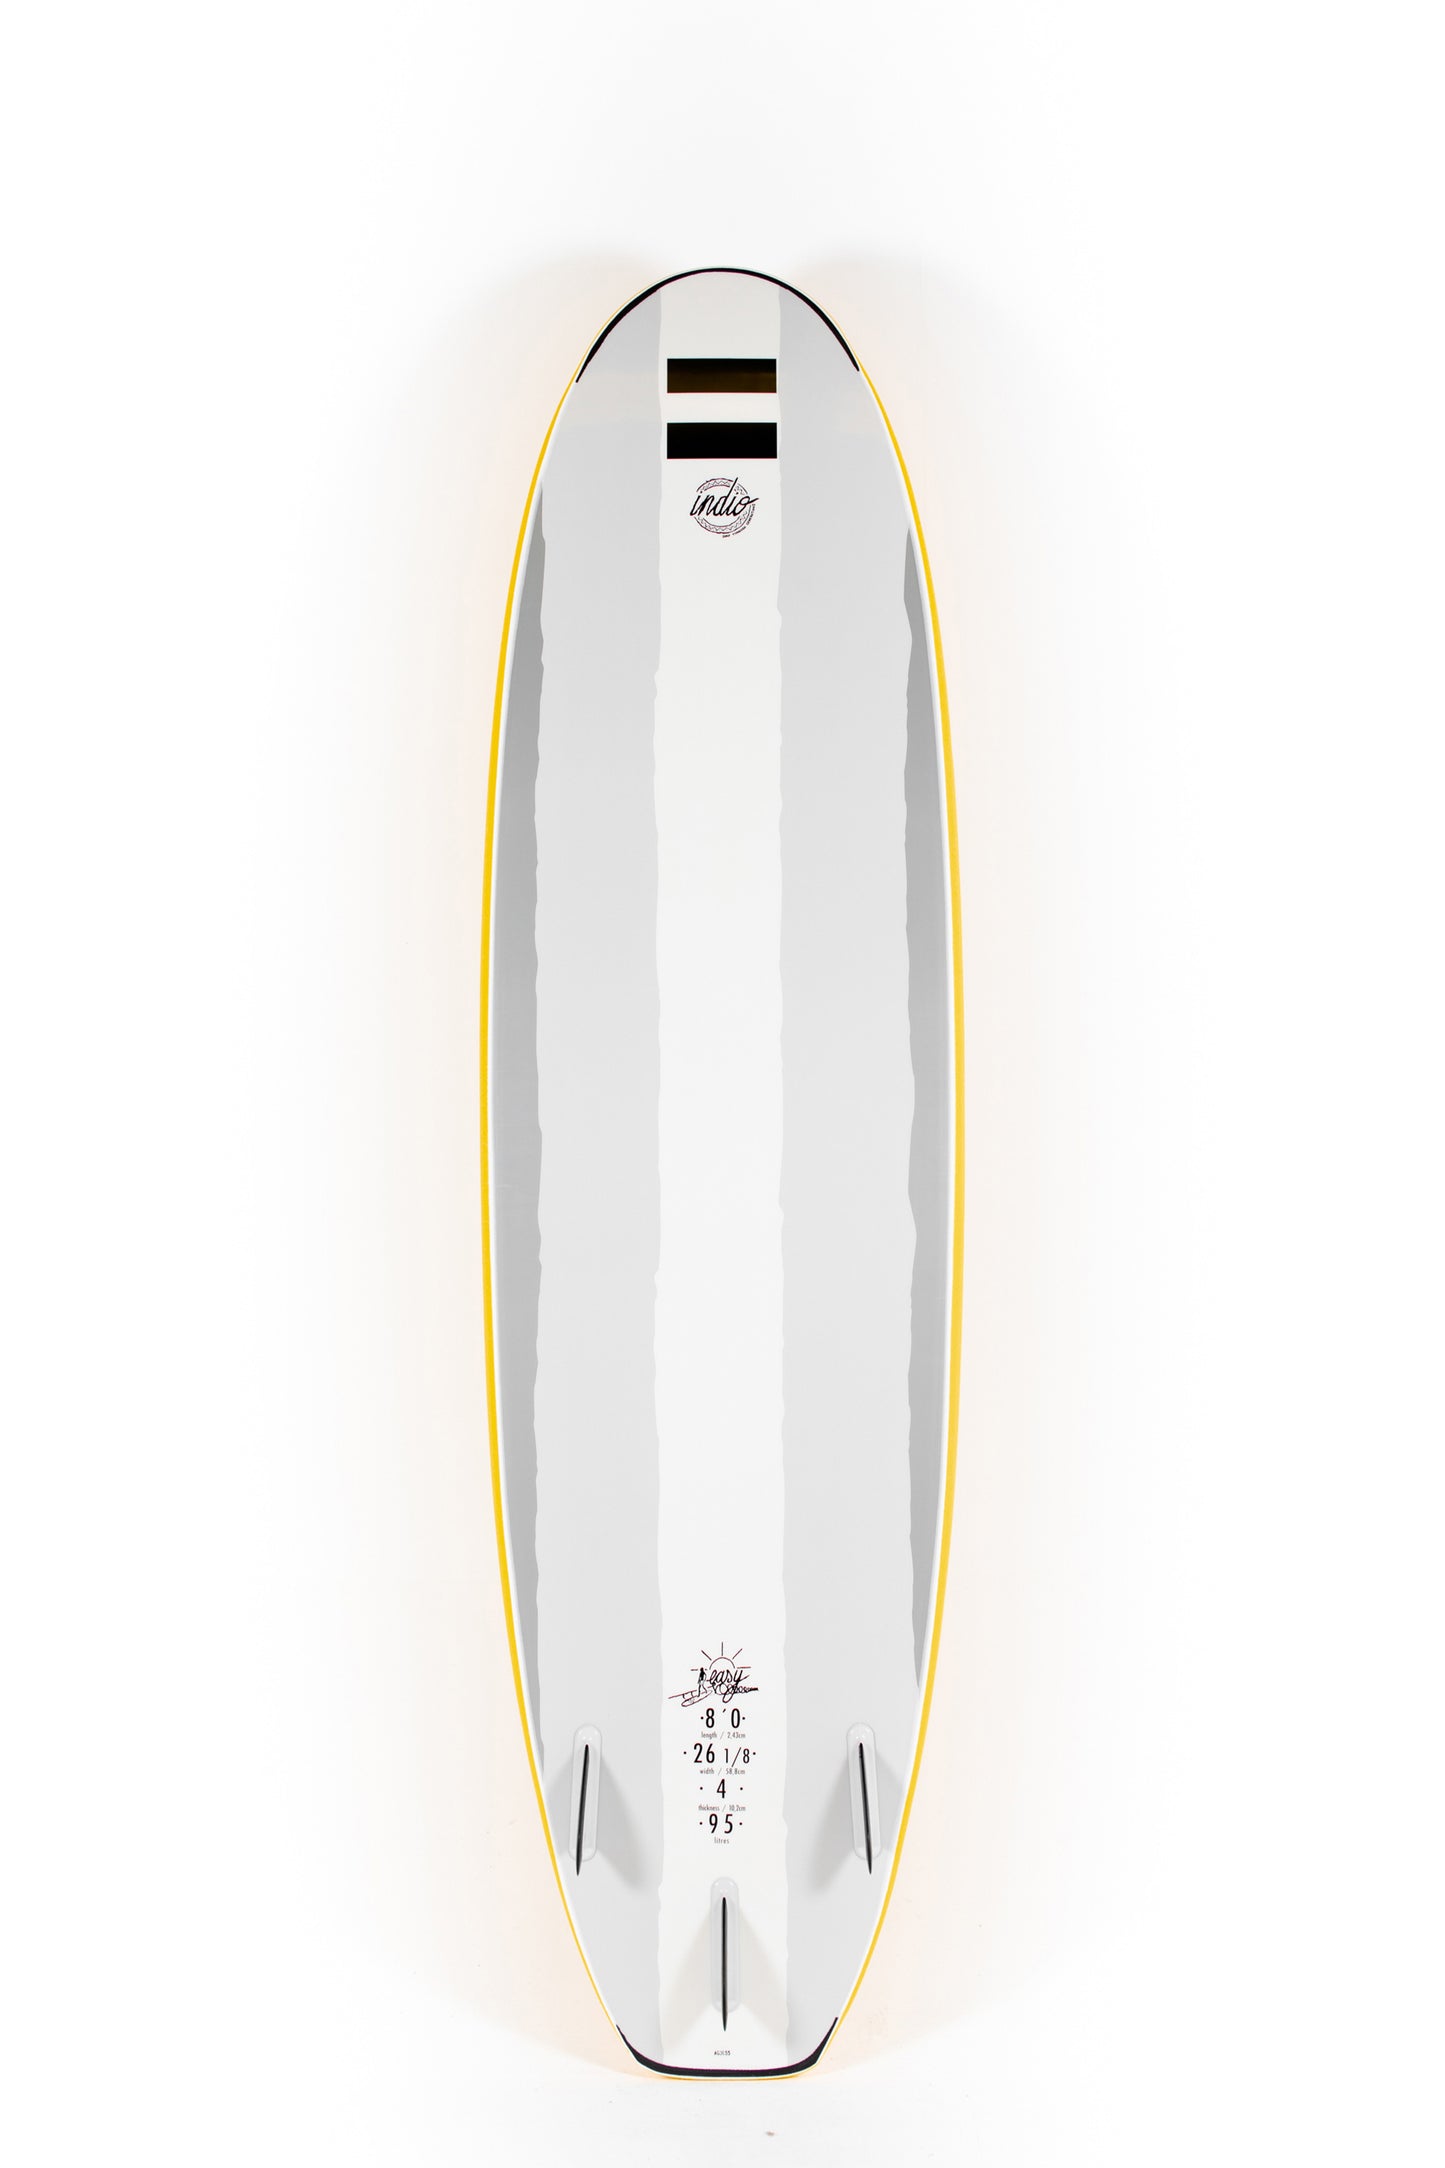 Pukas-Surf-Shop-Indio-Surfboards-Softboards-Easy